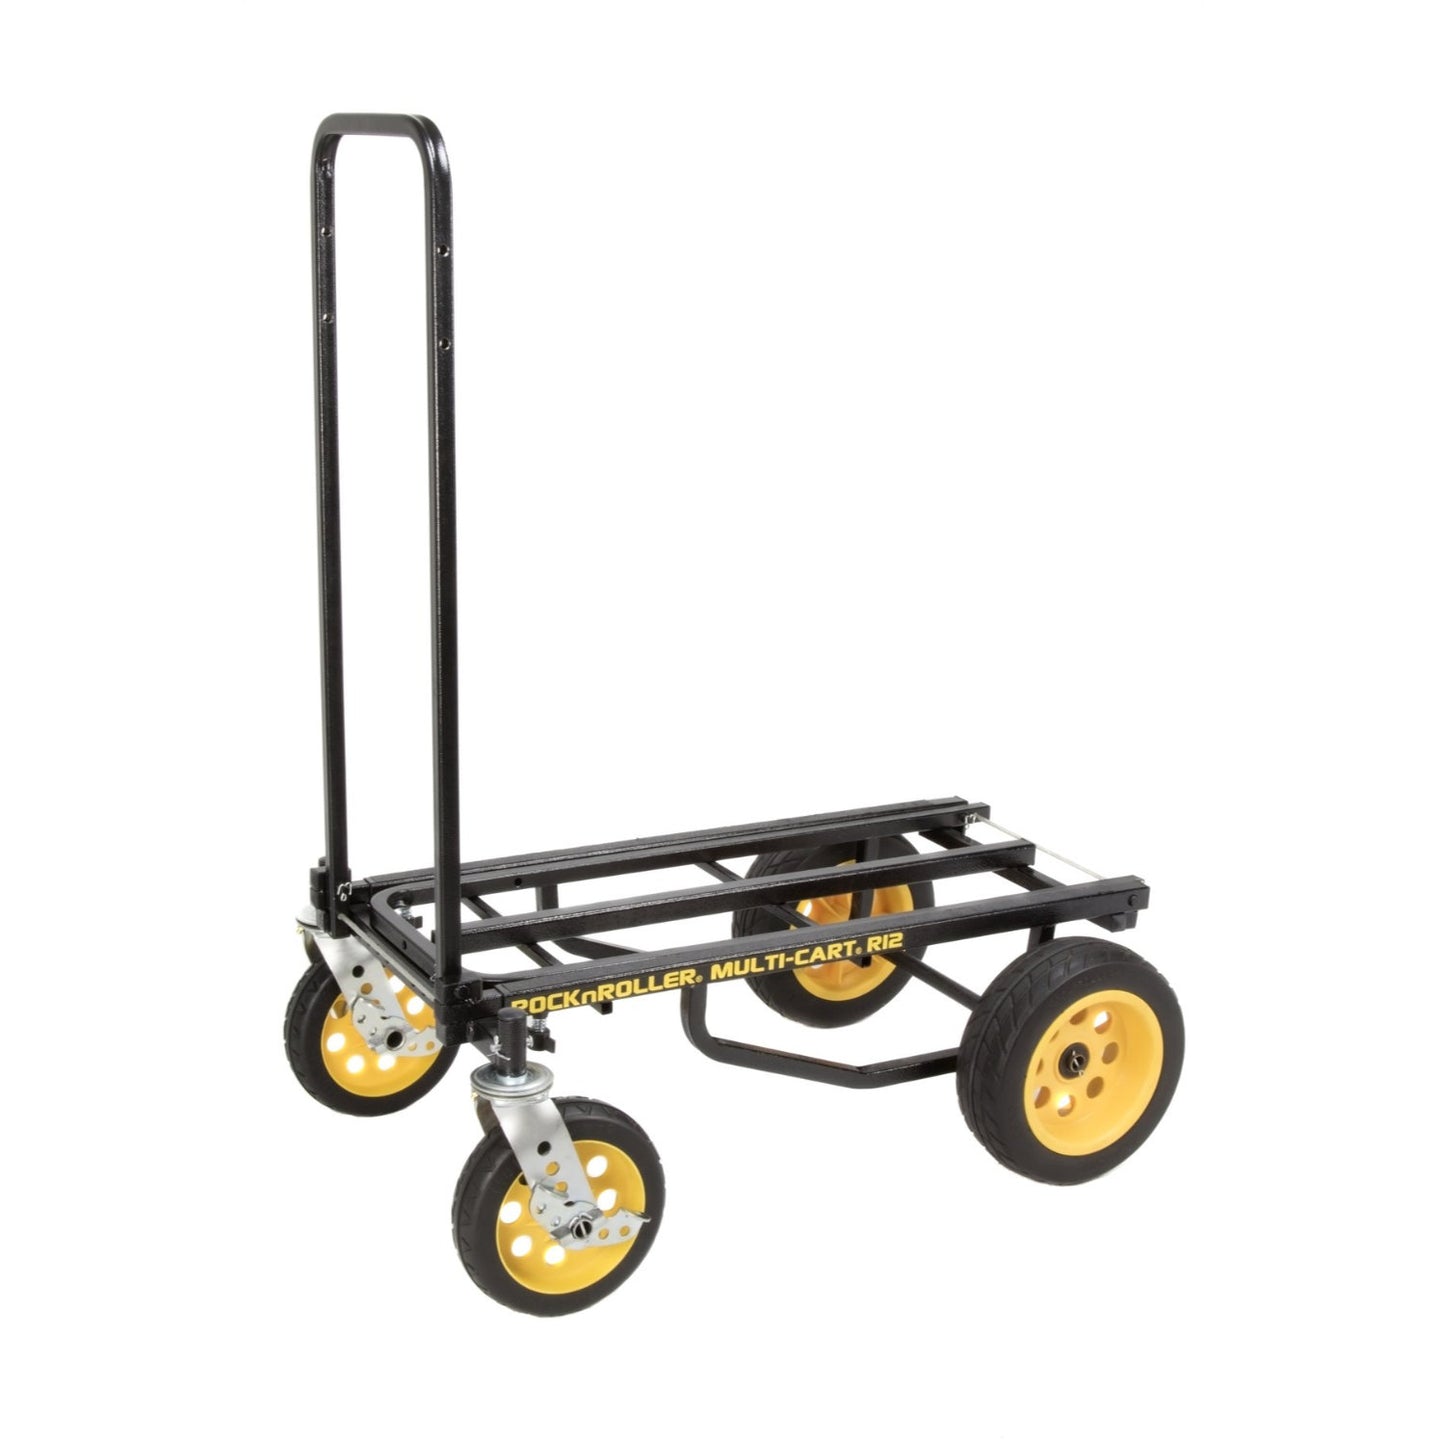 RocknRoller® Multi-Cart® R12RT "All Terrain"